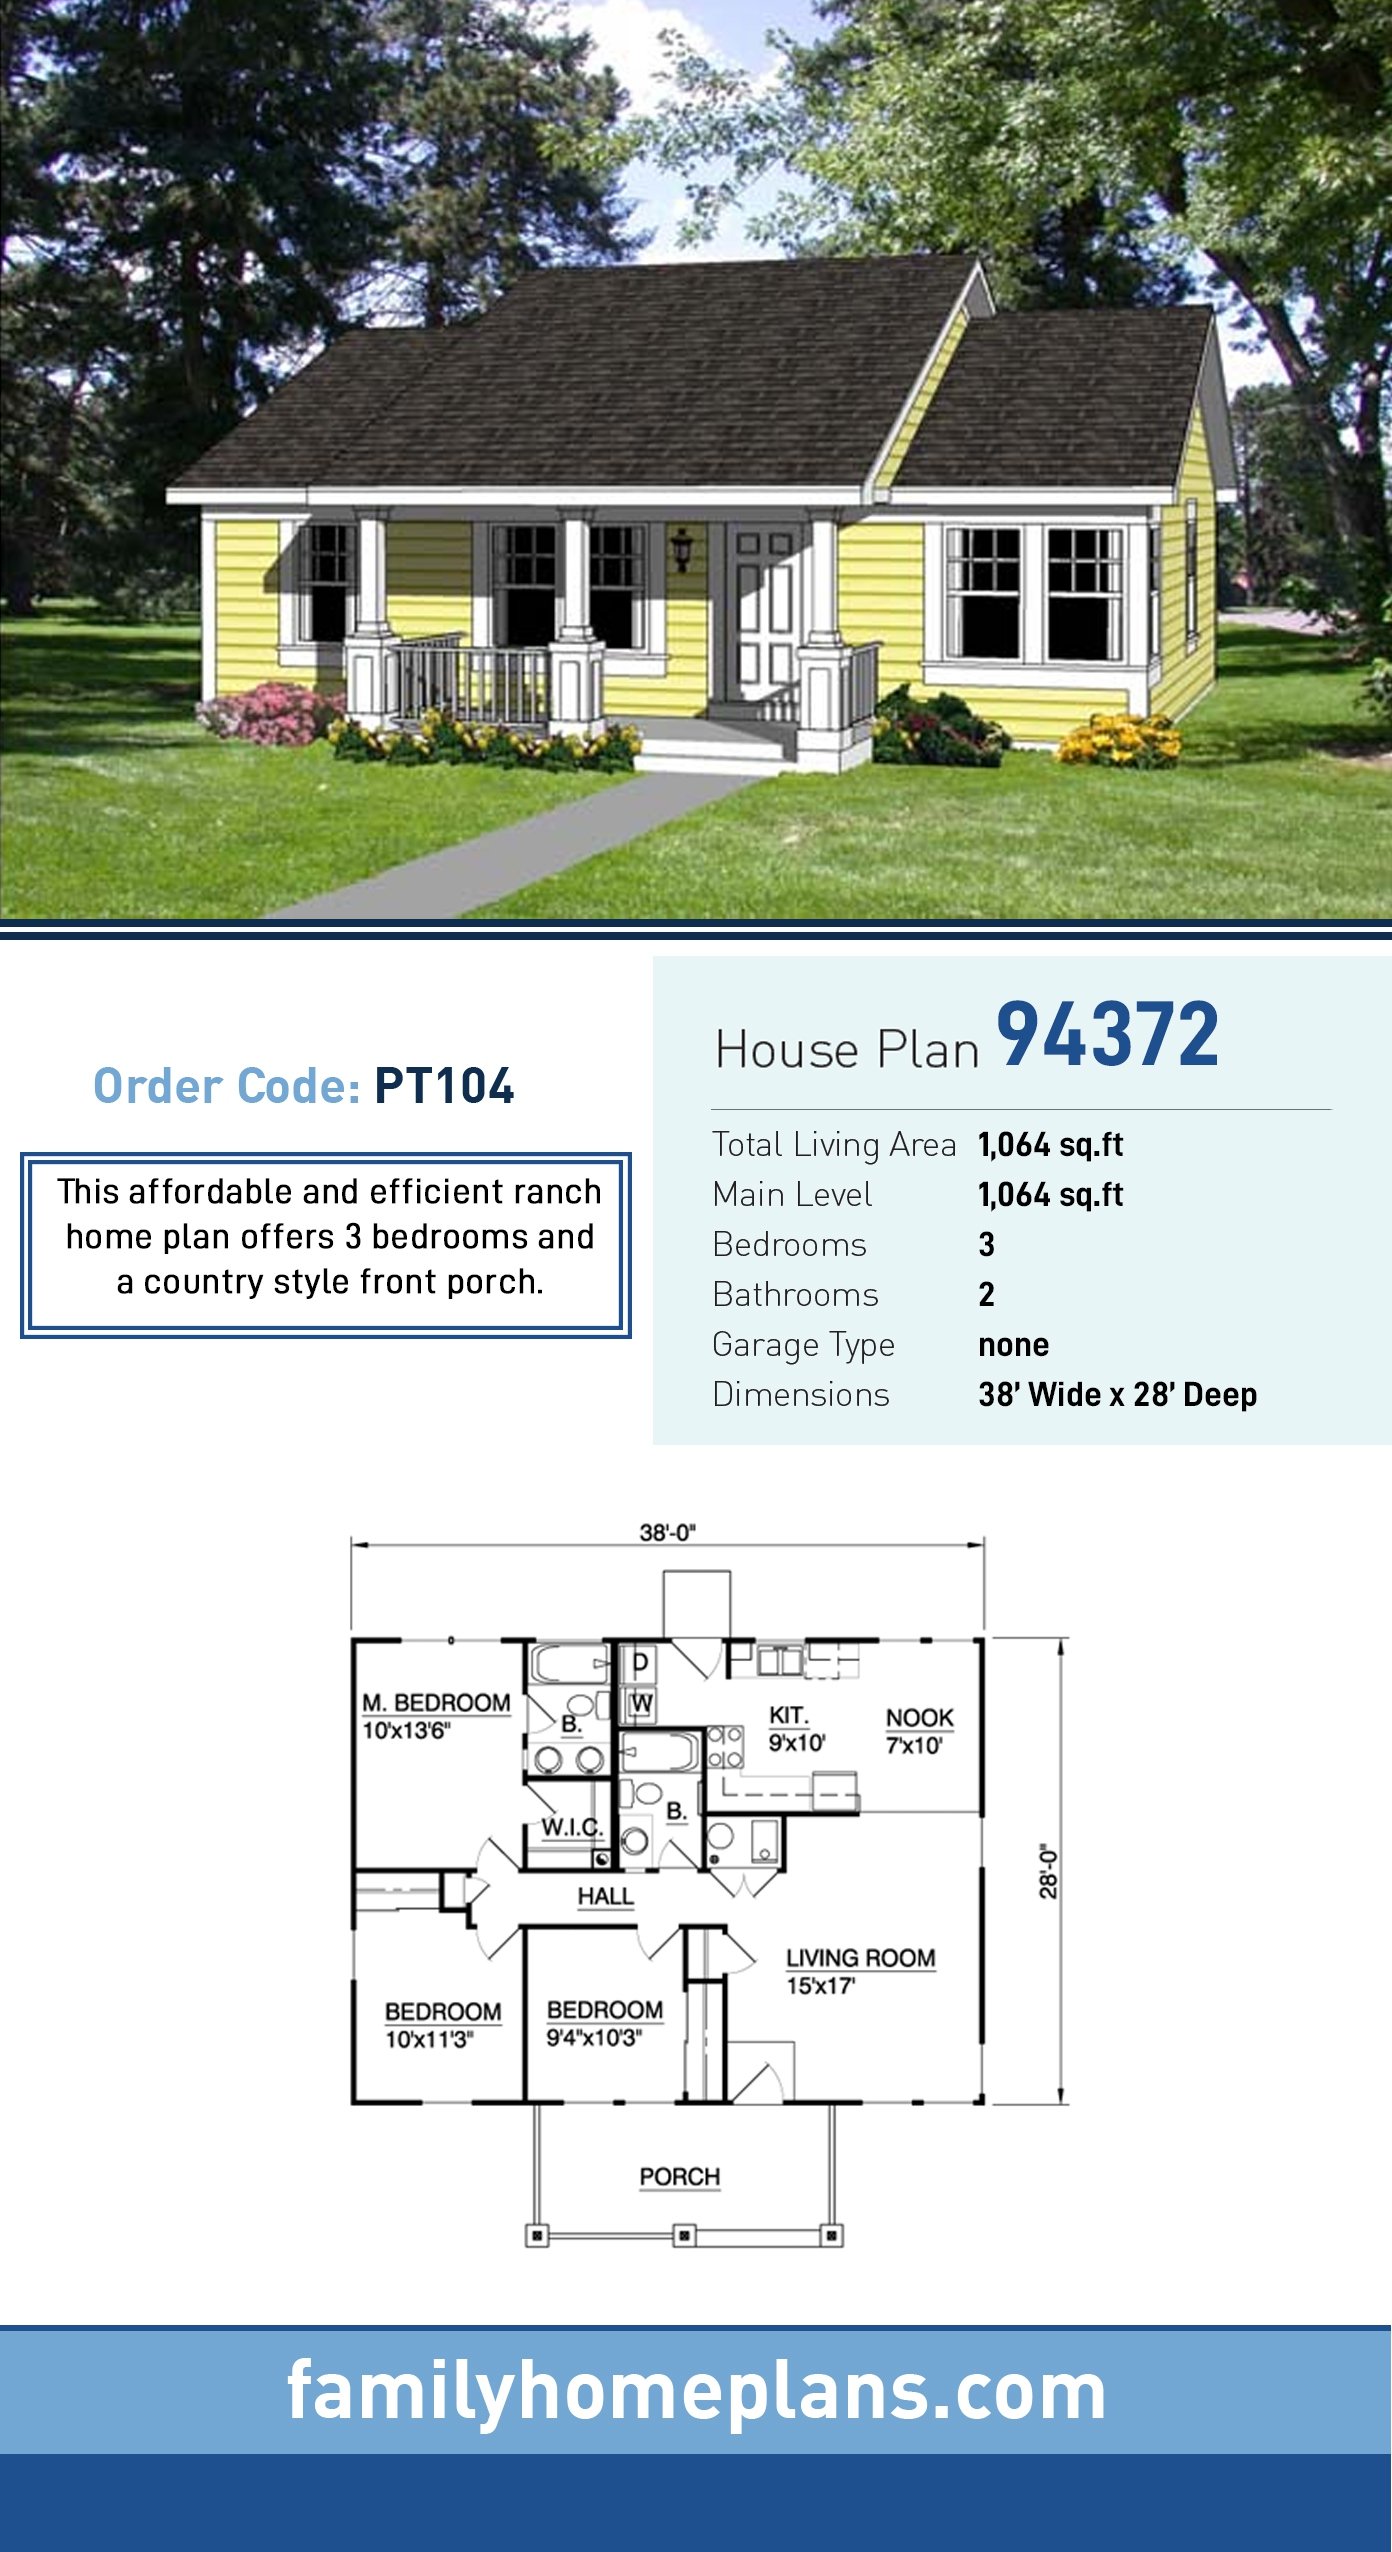 House Plan 94372